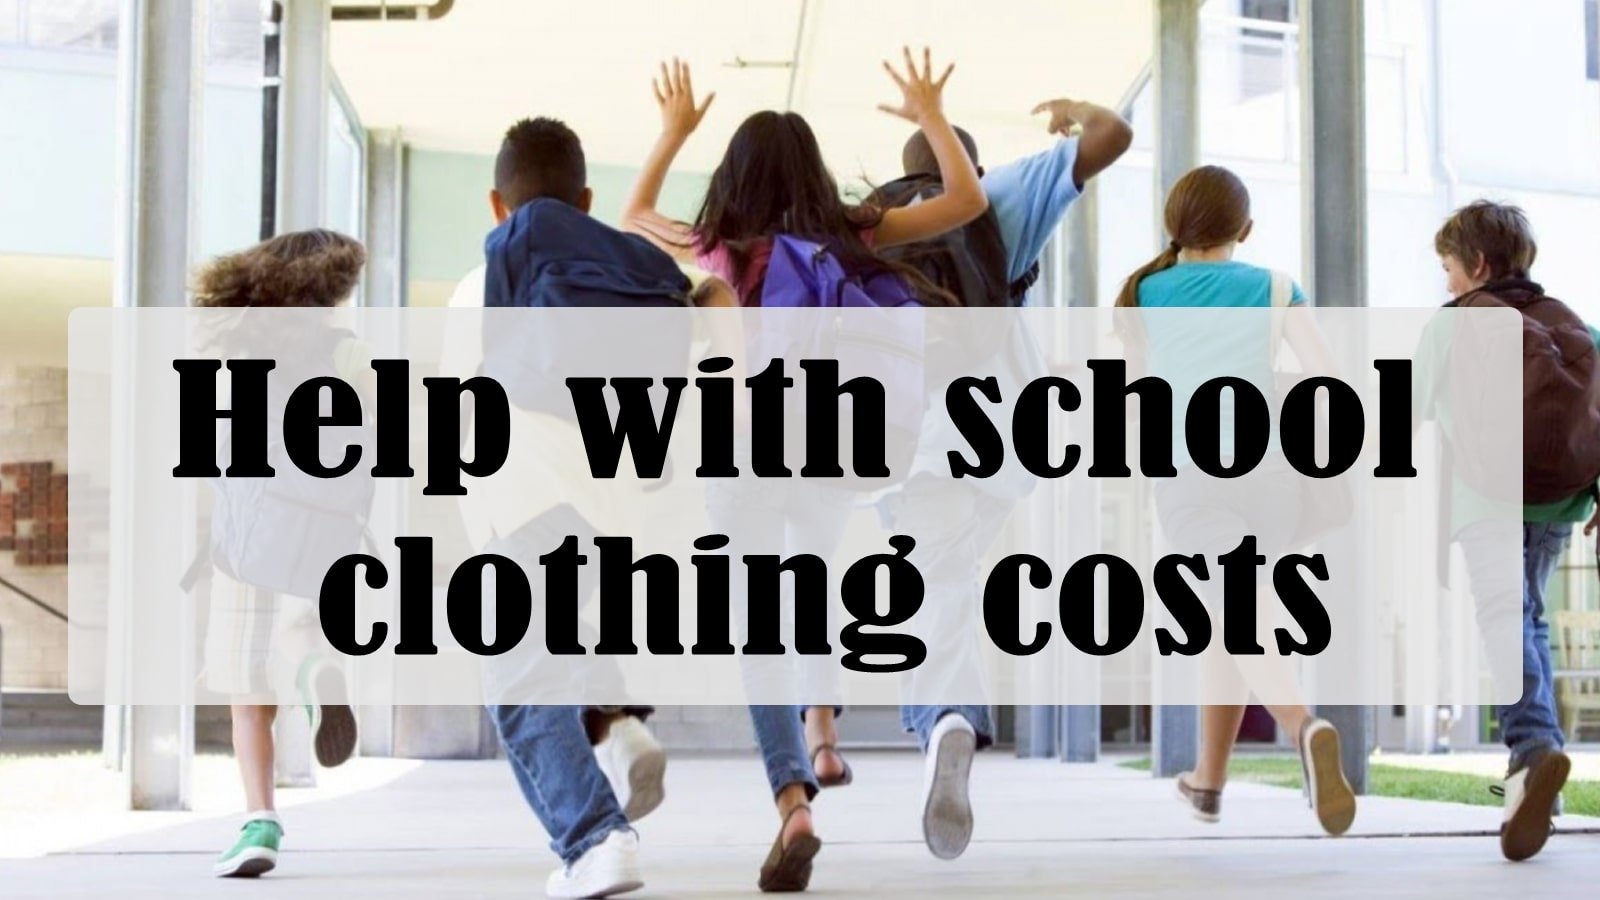 School clothing grant